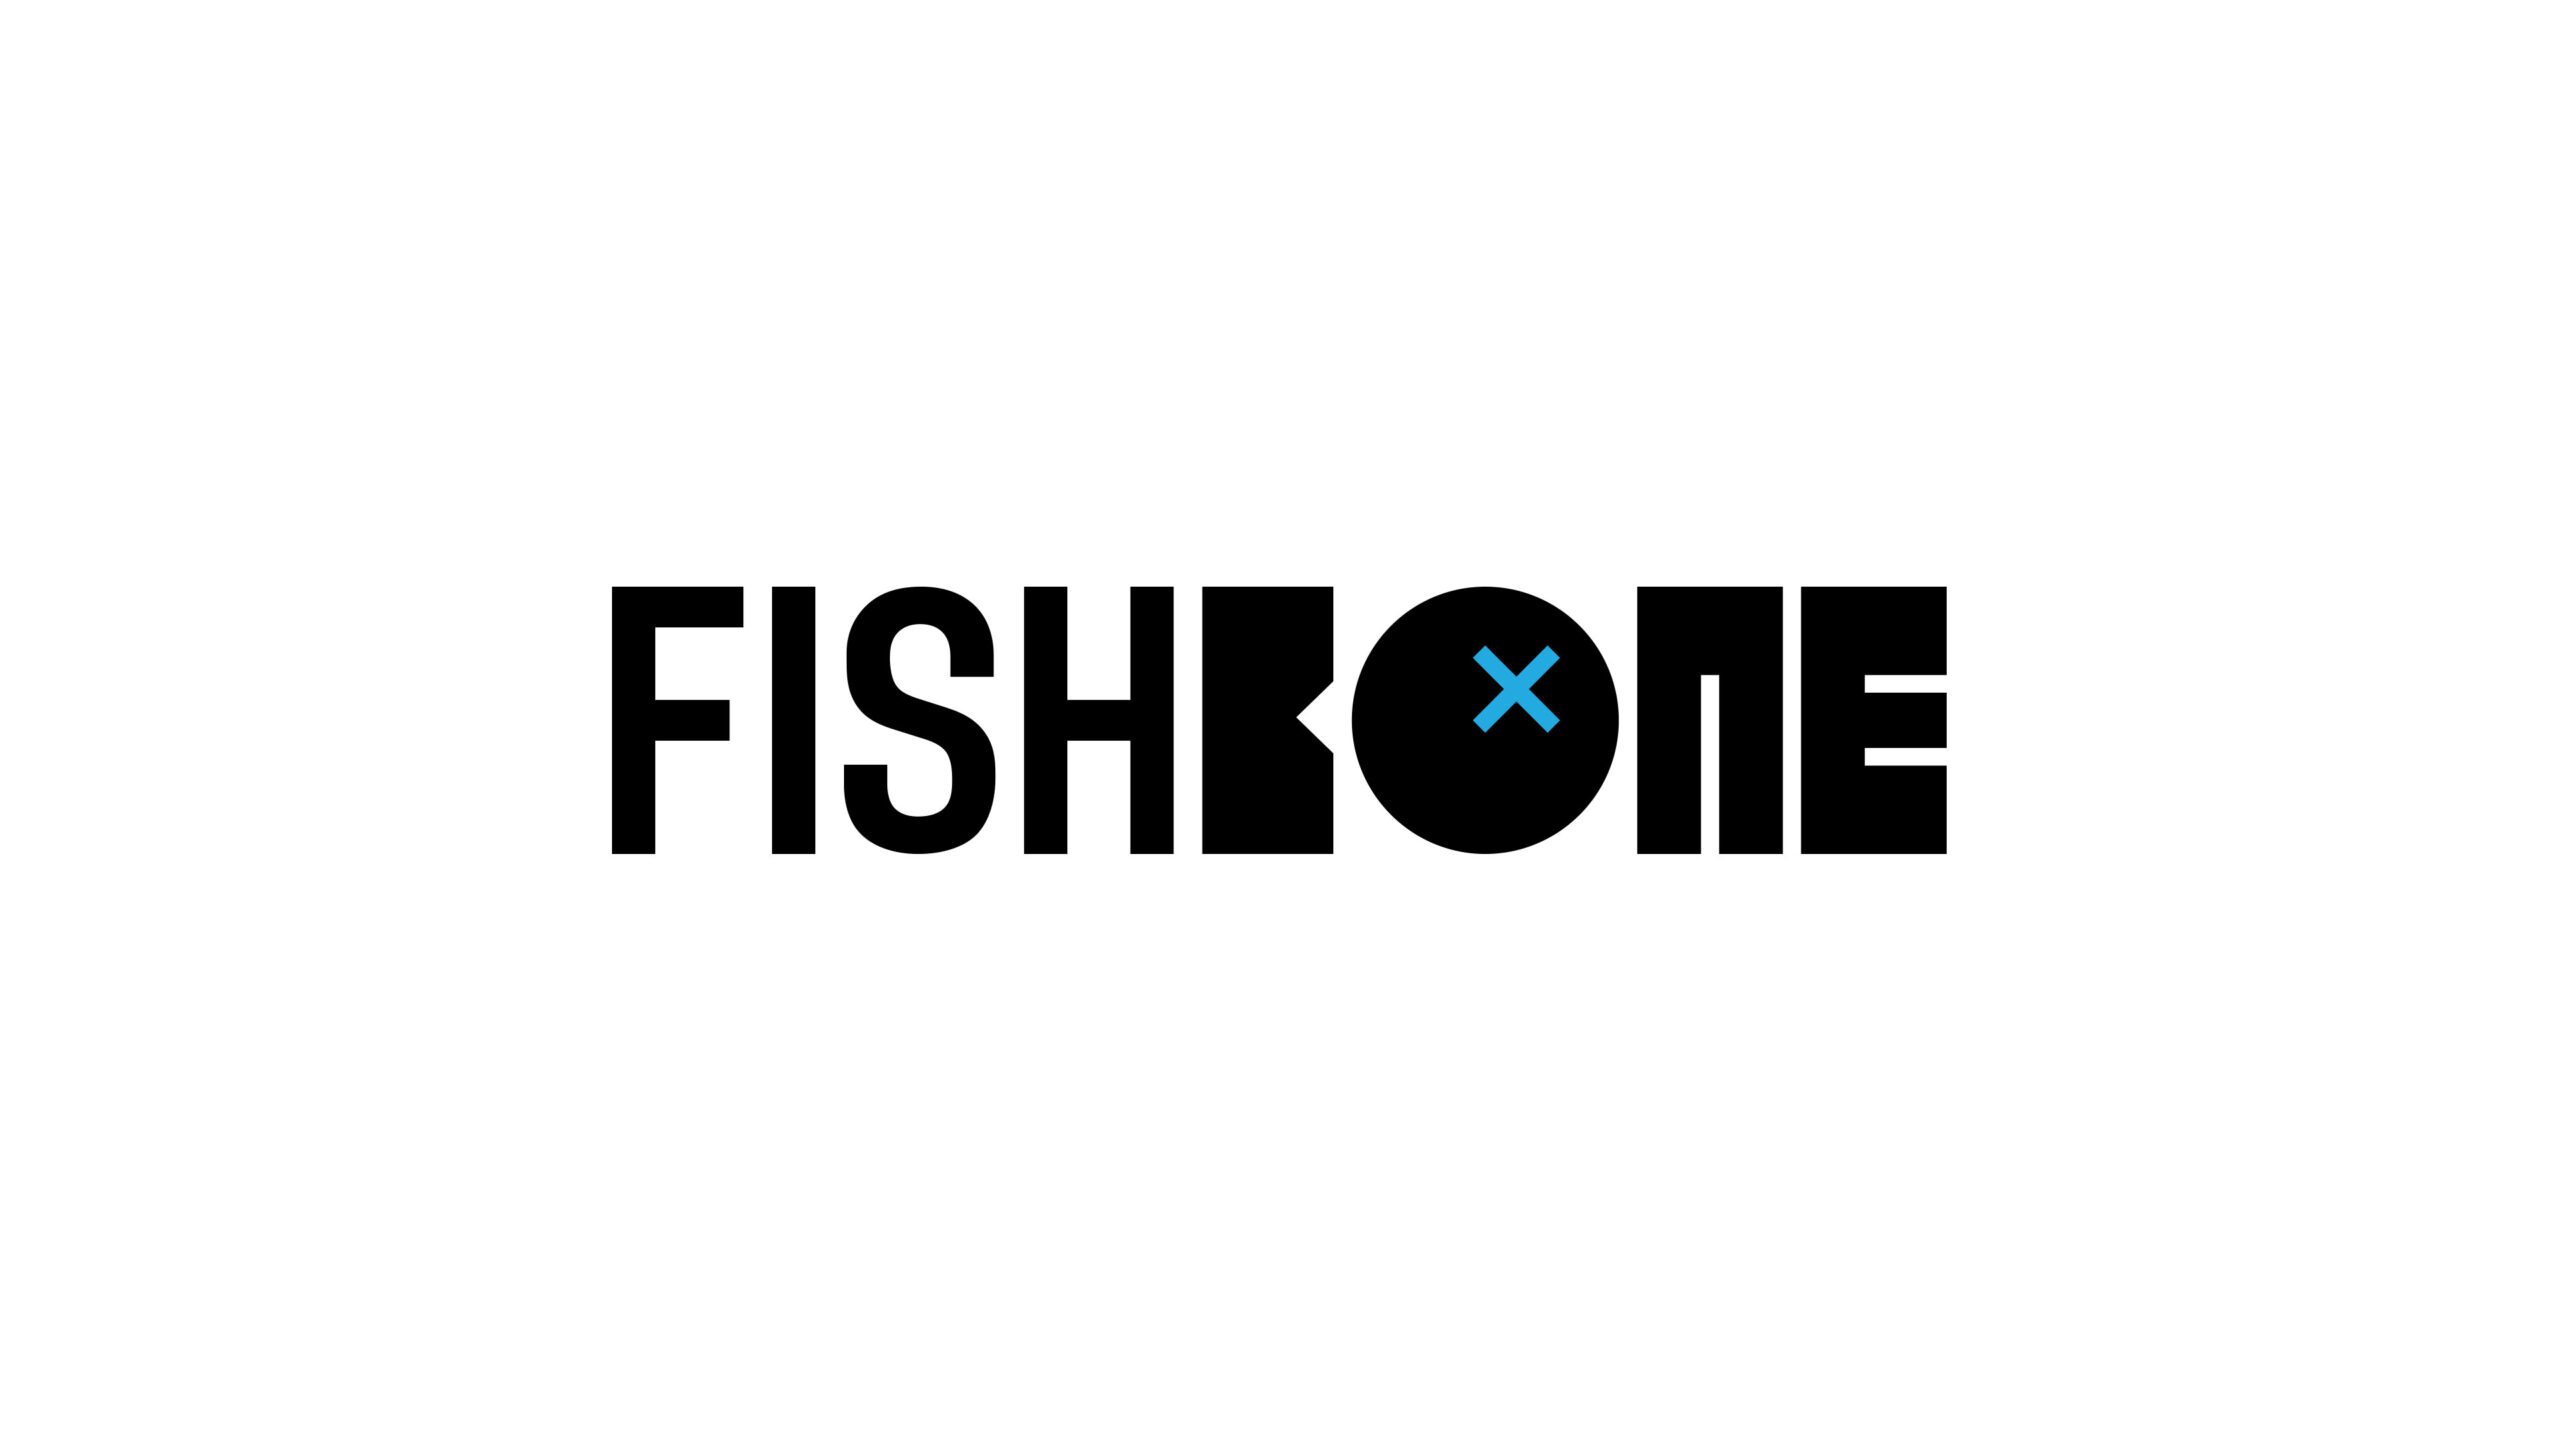 Fishbone-By-STORM-Desing-Studio-02